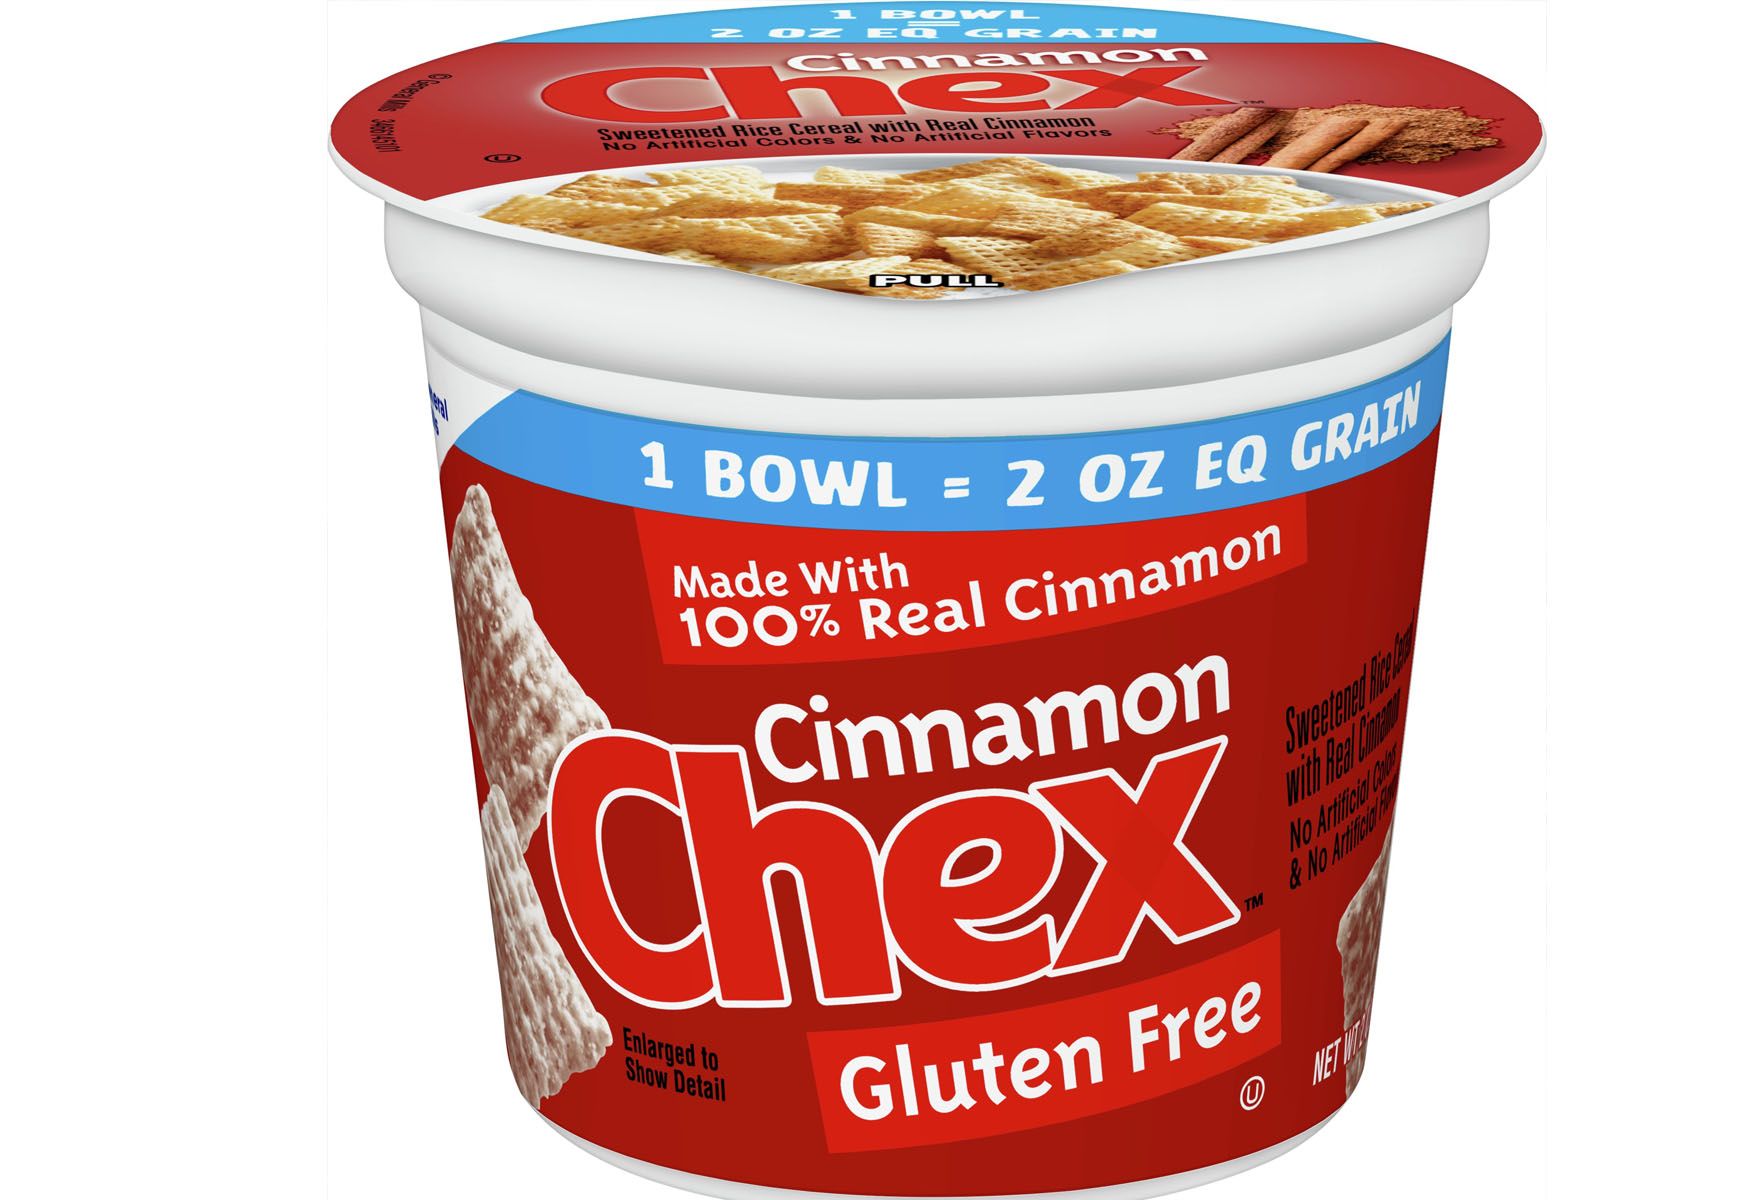 11-cinnamon-chex-nutrition-facts